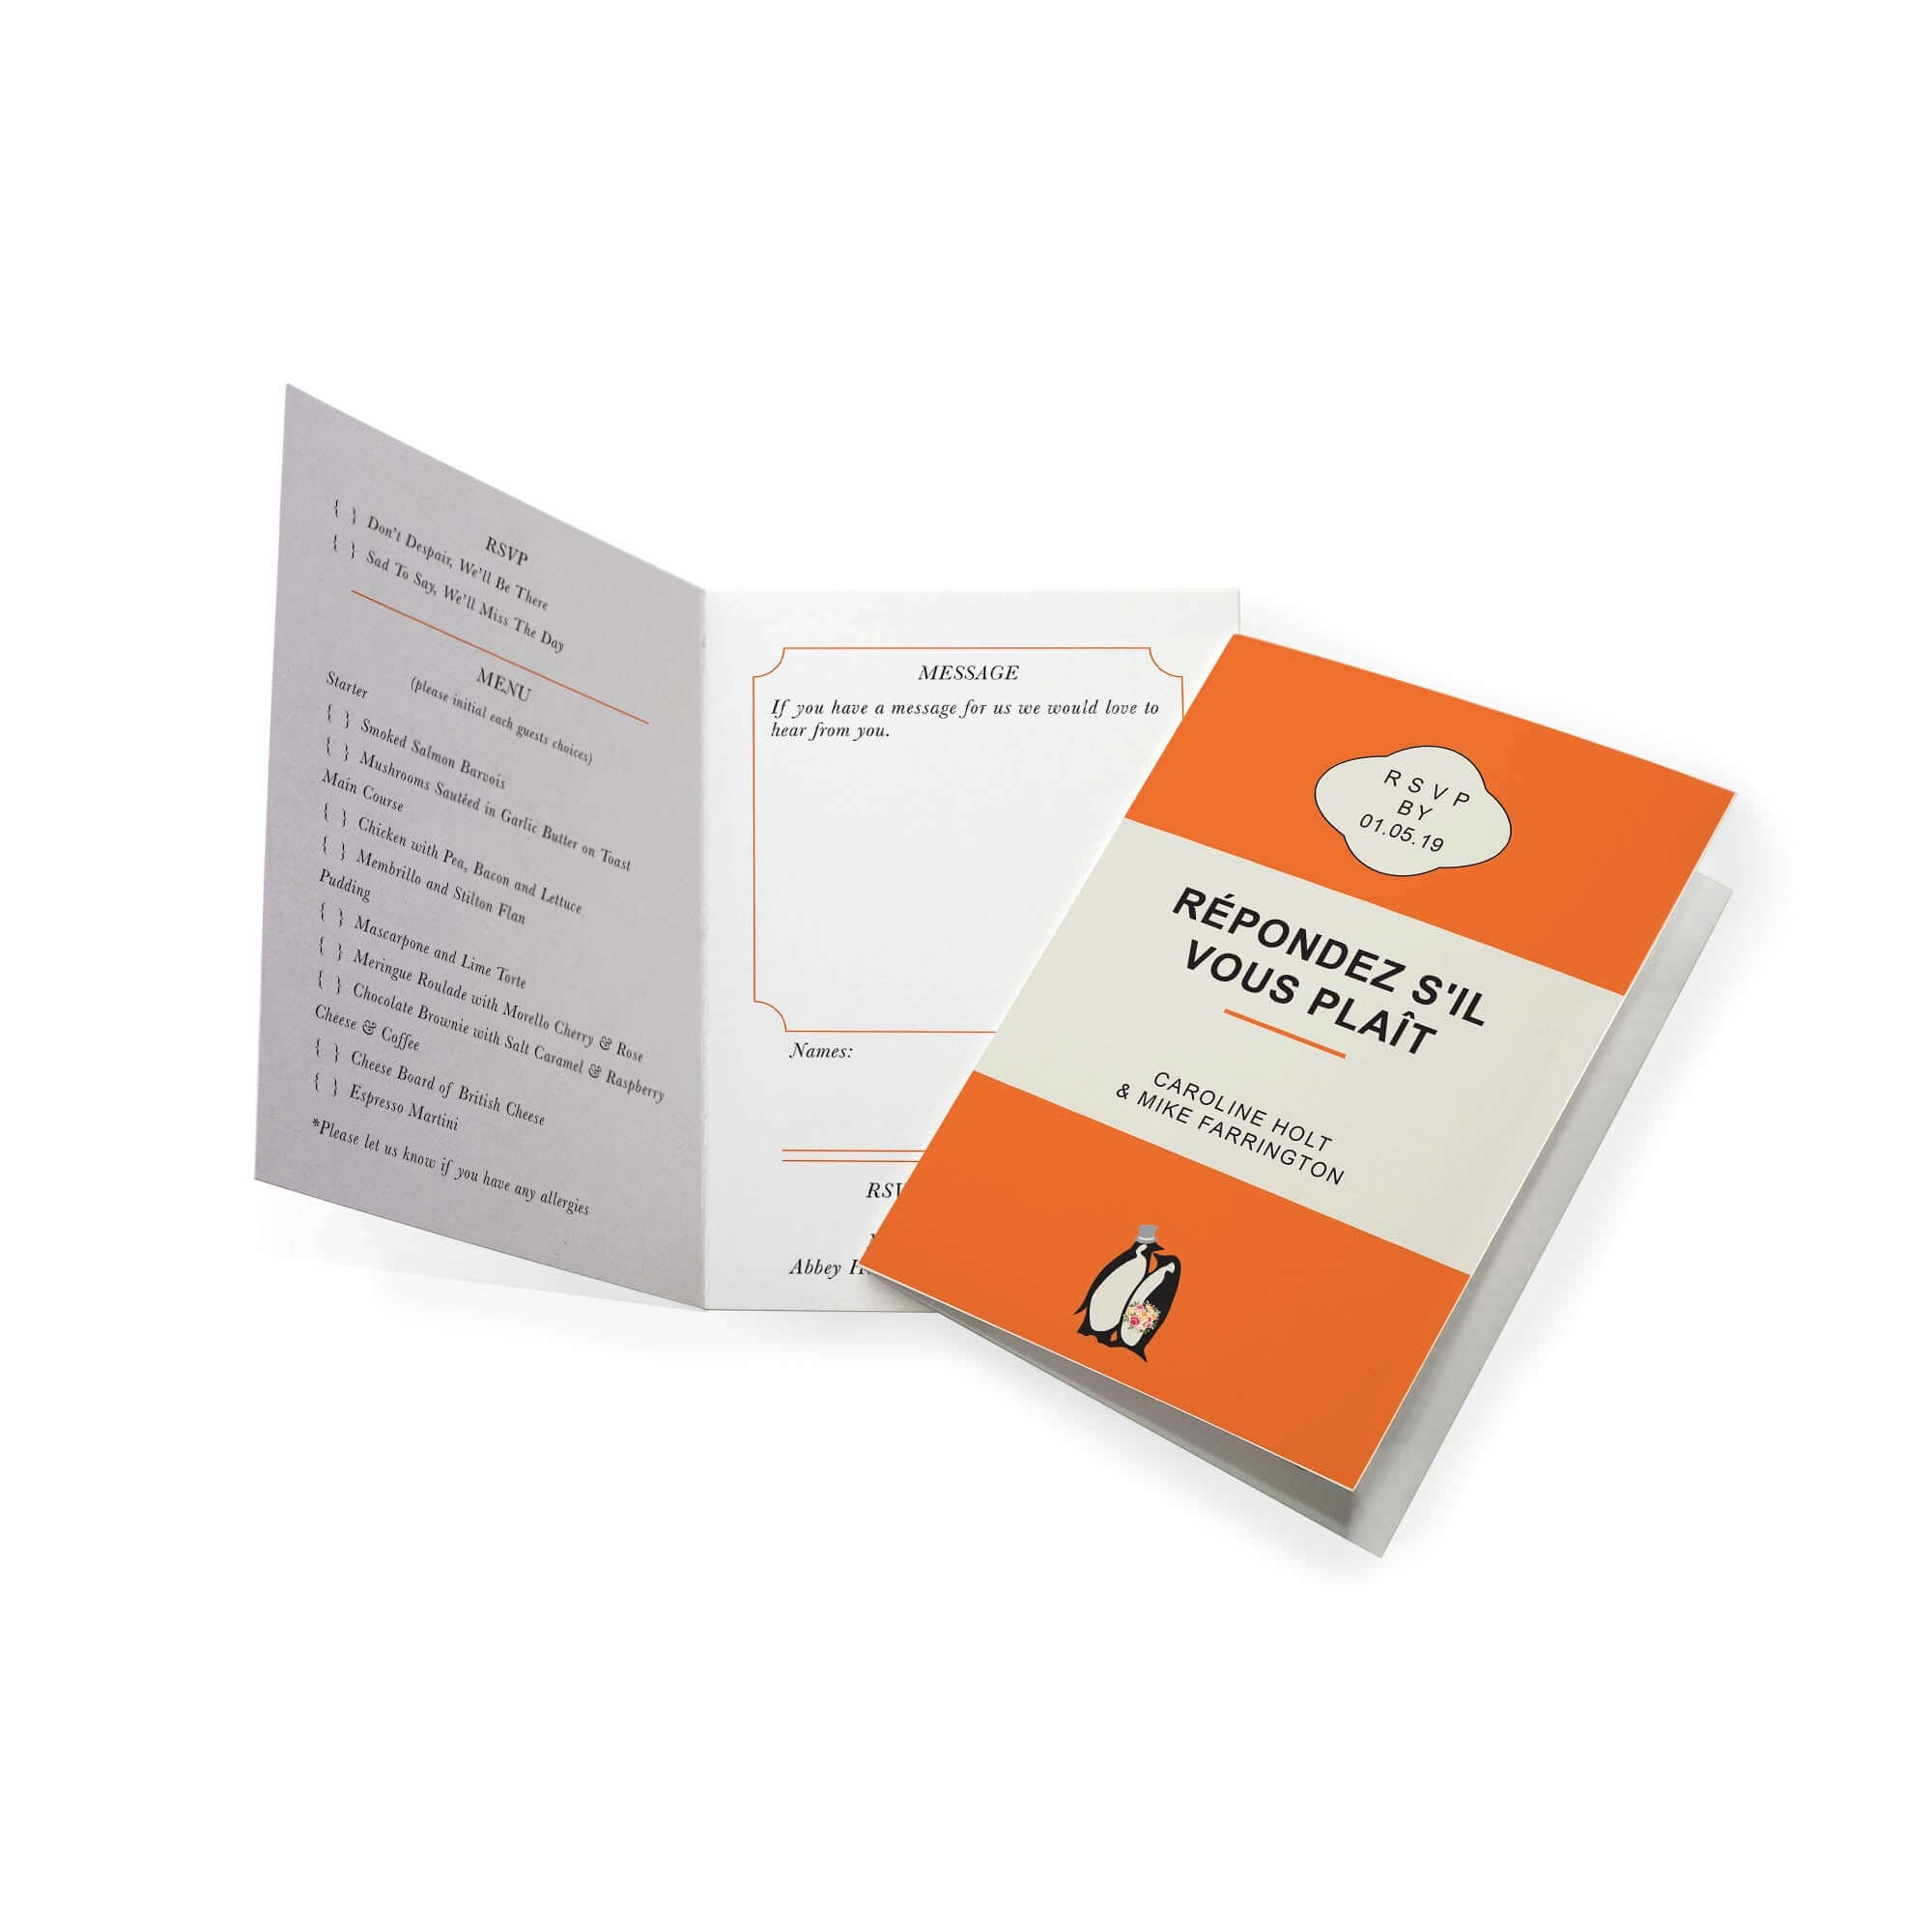 Penny Classics Book Folded RSVPs Wedding Stationery Mustard and Gray Ltd Shropshire UK